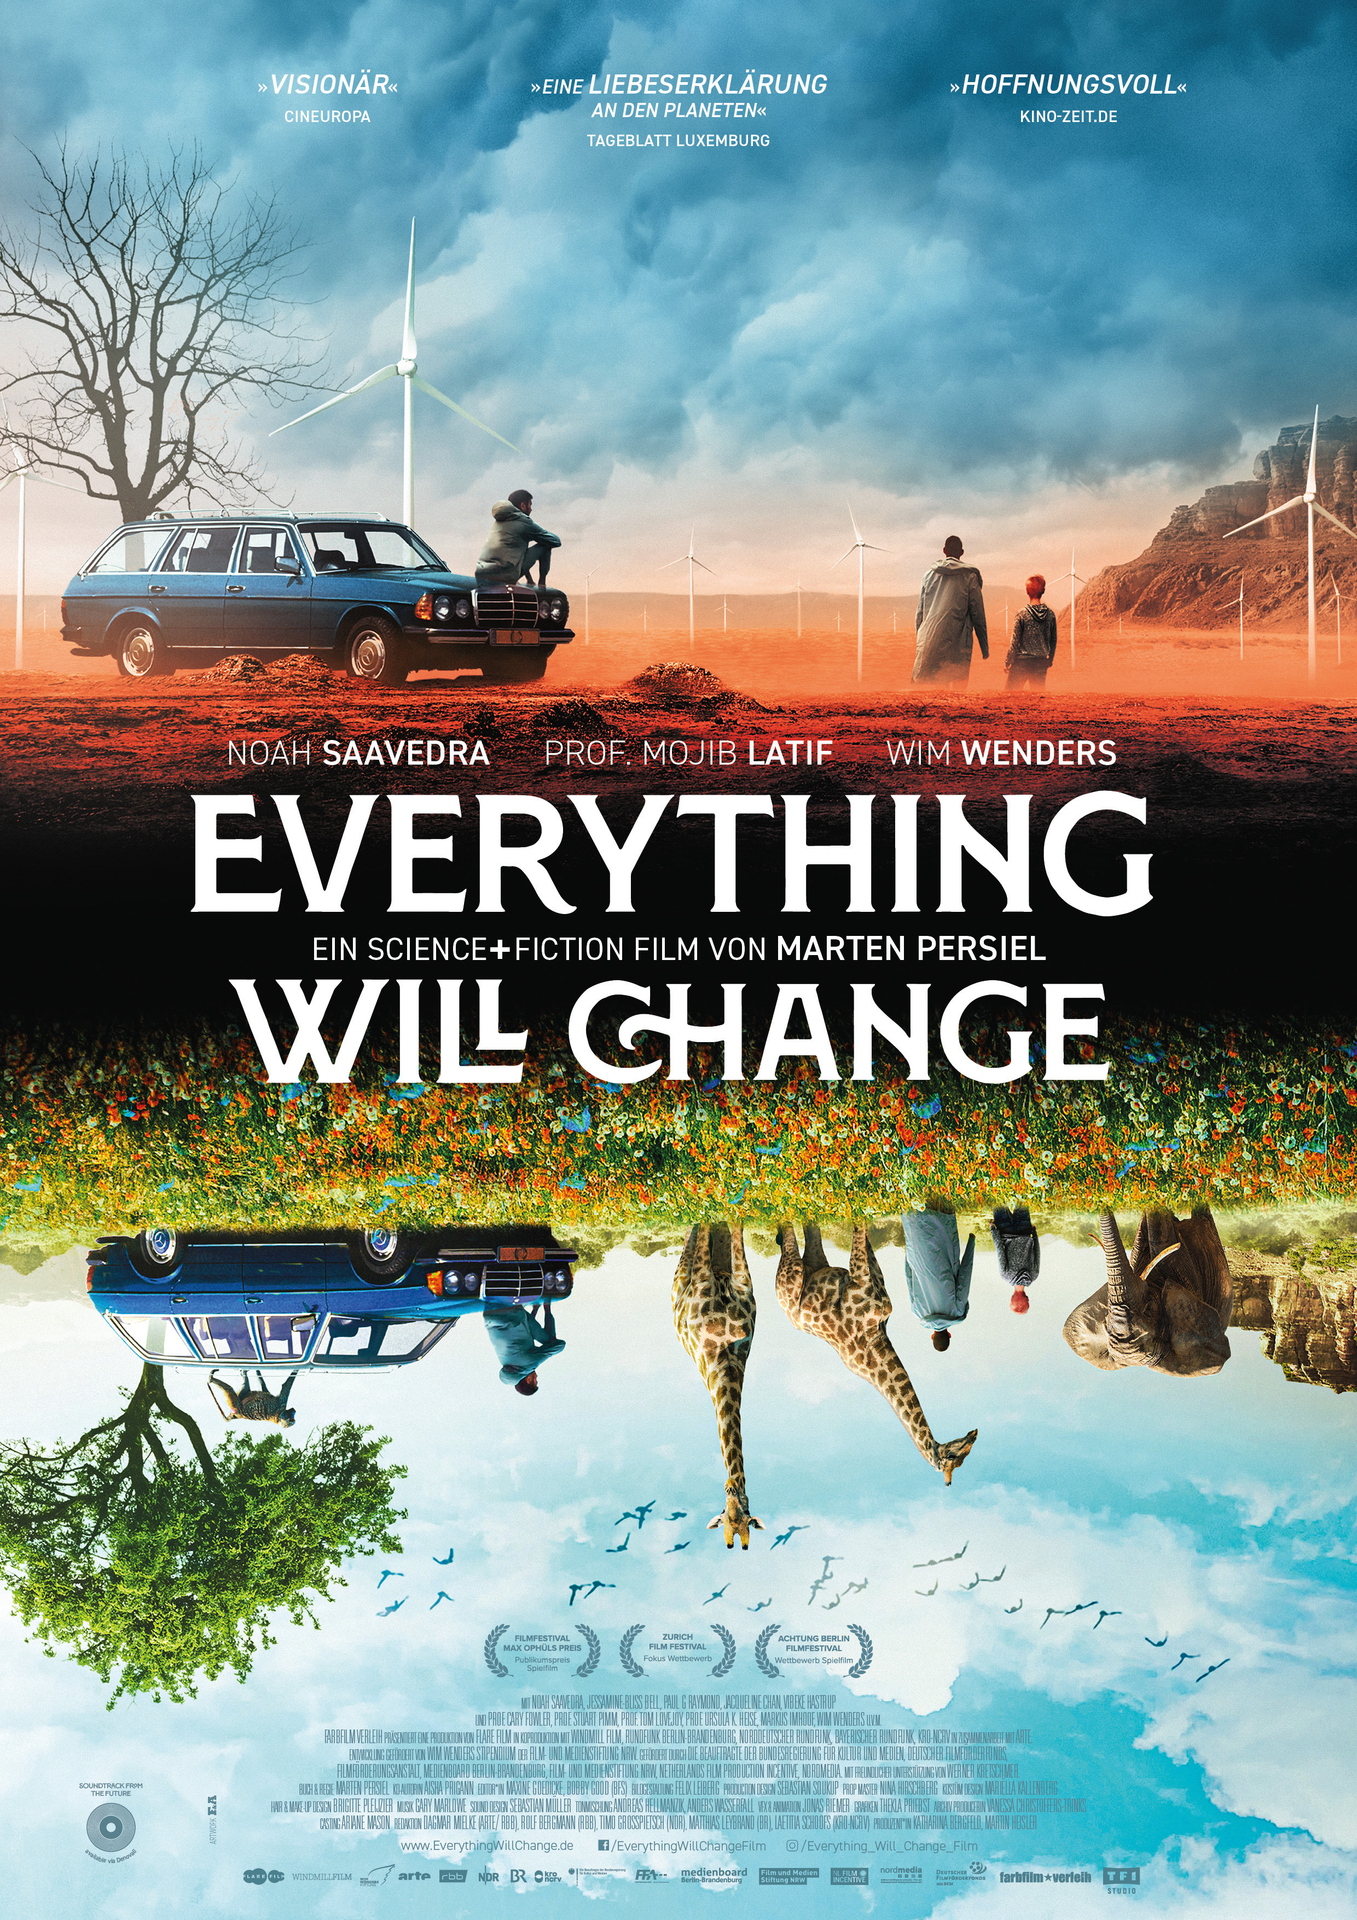 Titelbild "Everything will change"